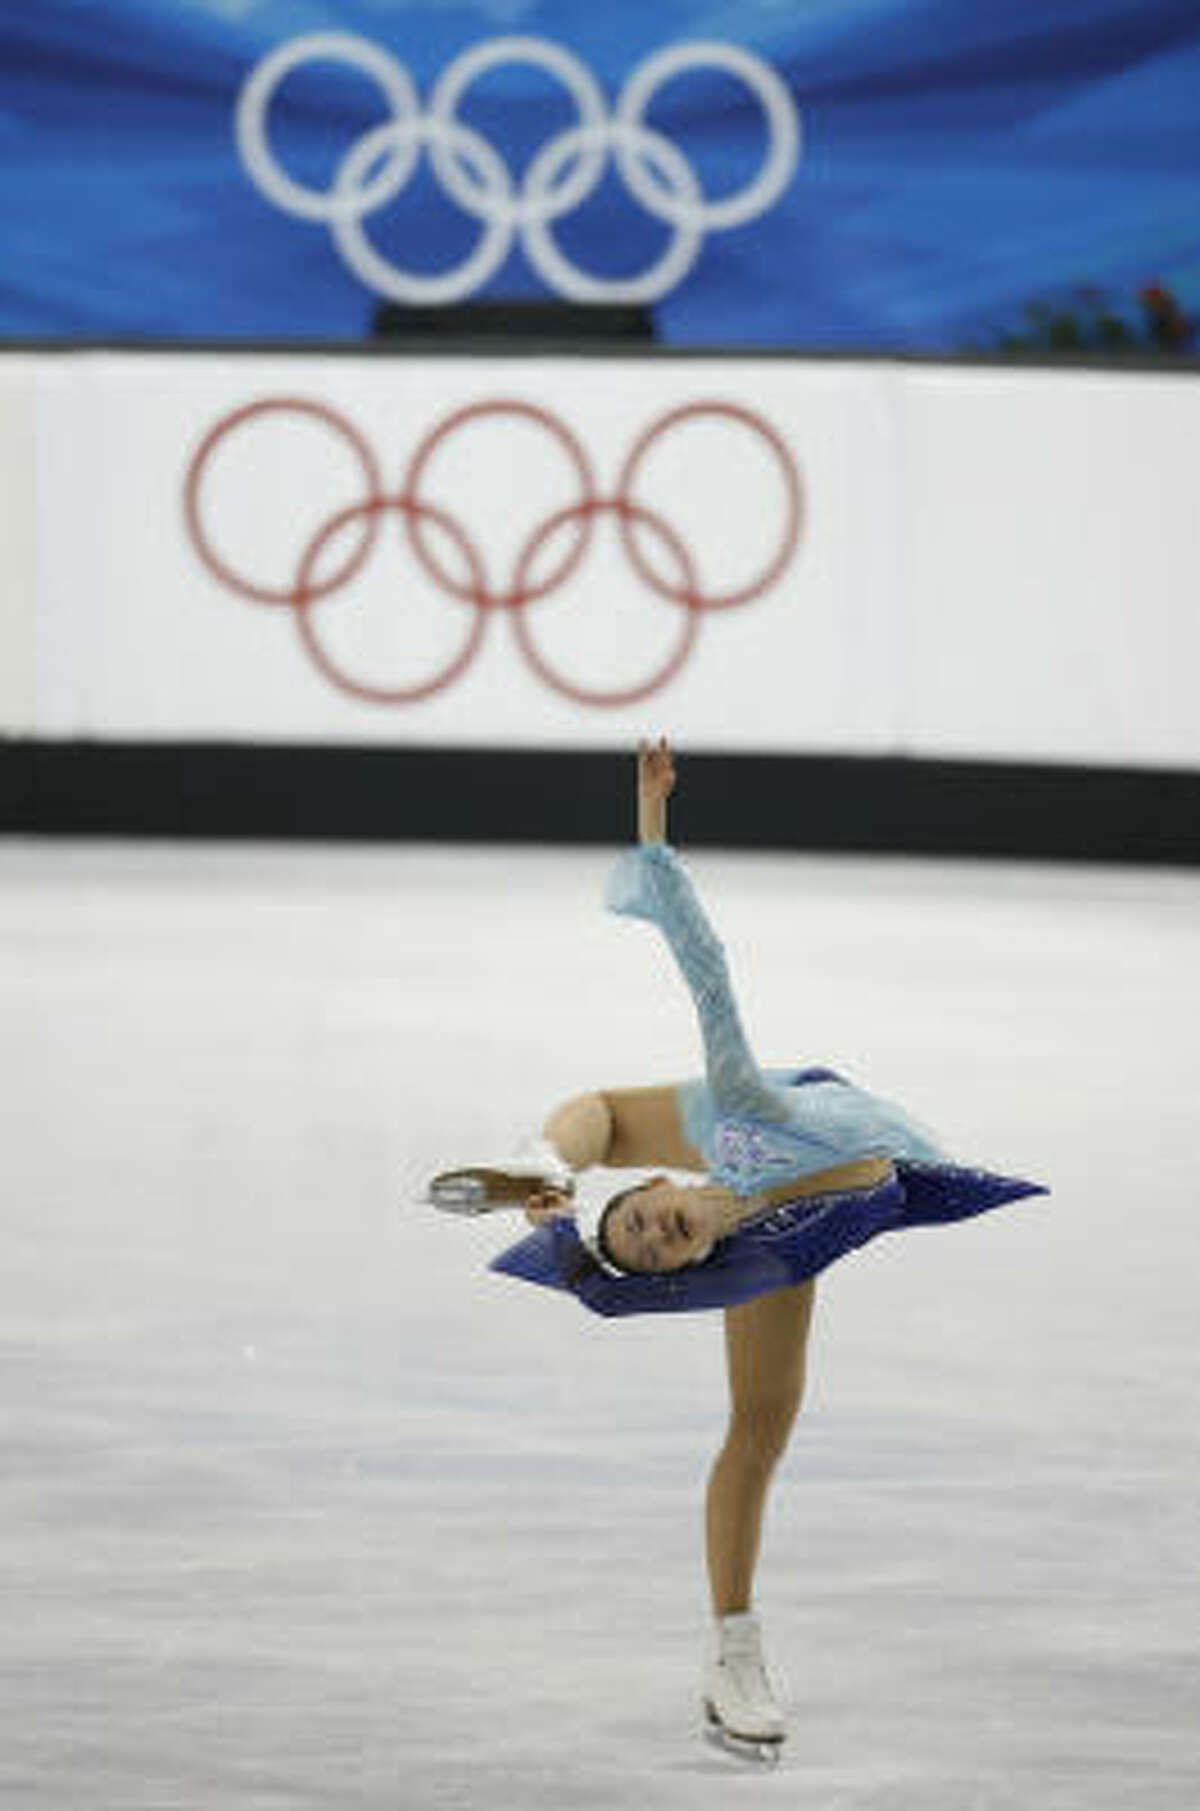 Winter Olympics Feb. 23